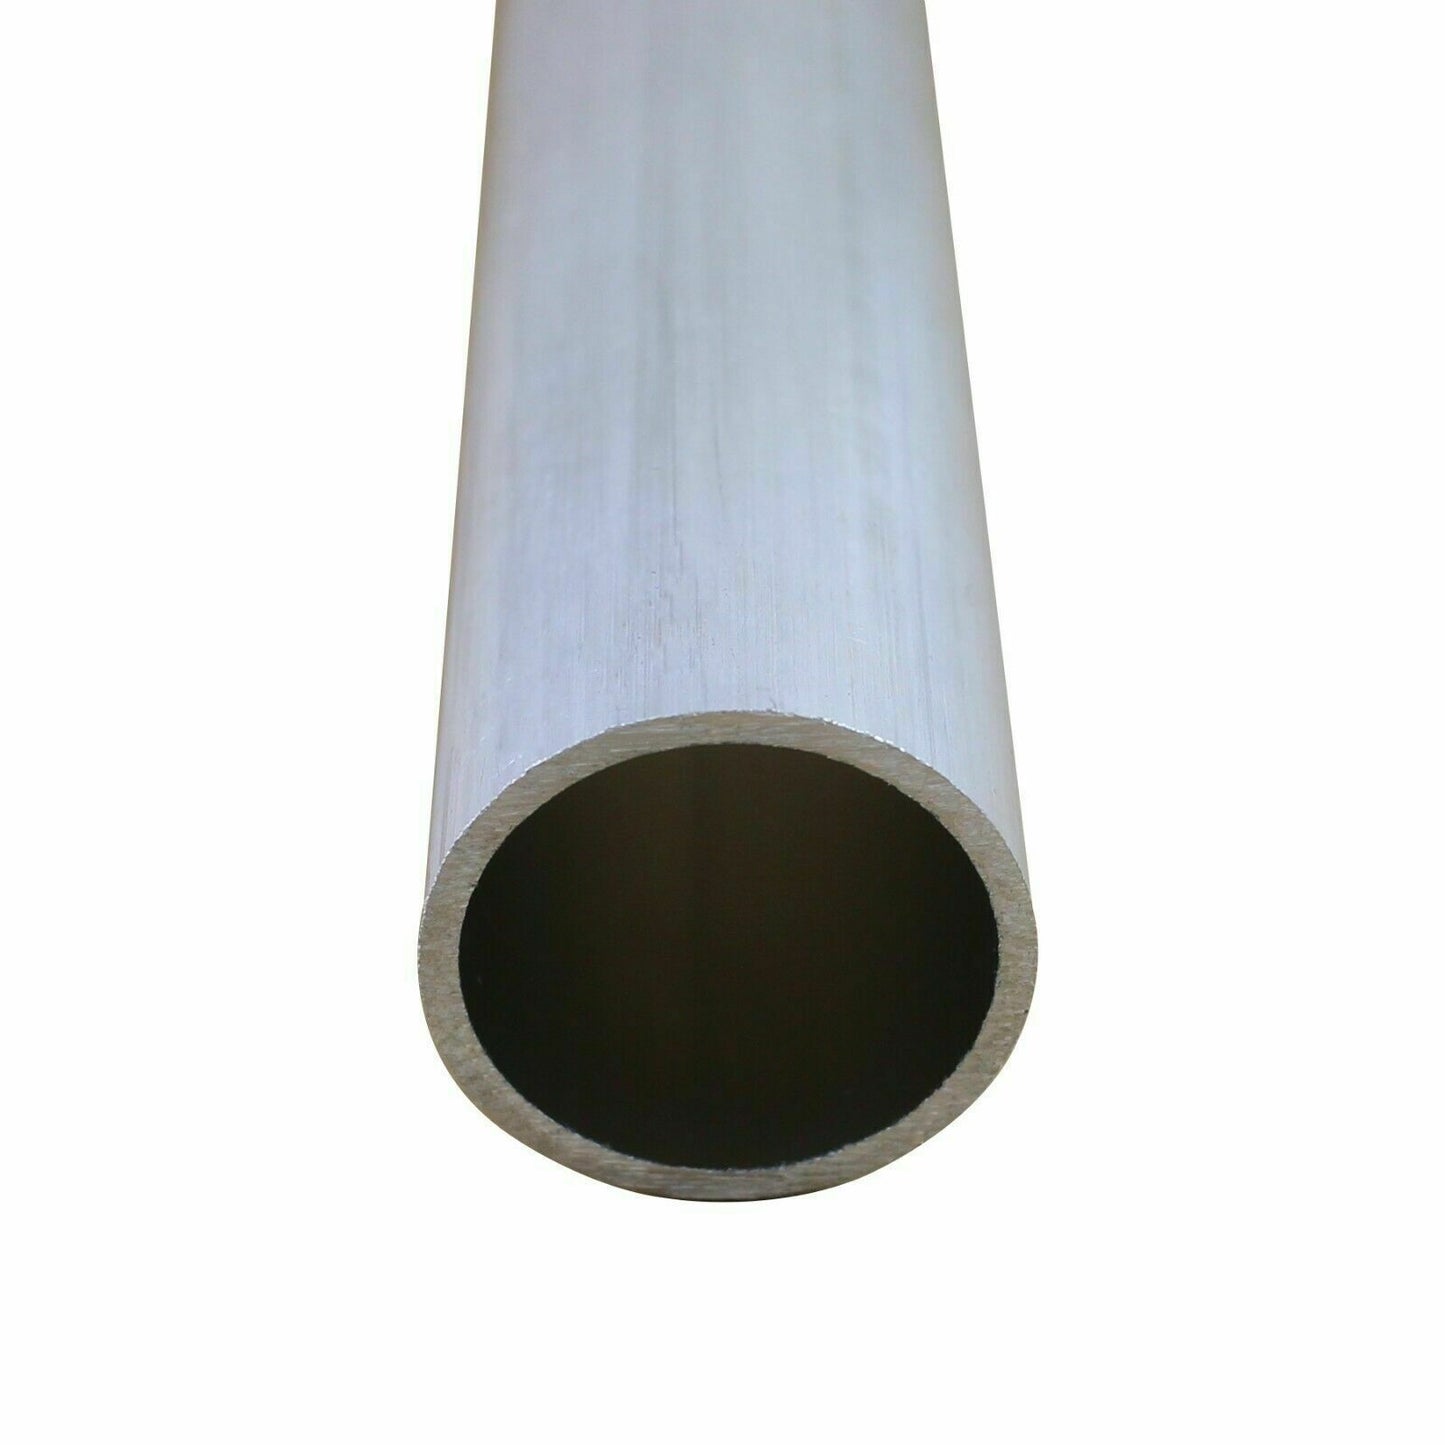 OD 24 mm ID 16 mm 1 Pcs Aluminum Round Tube Pipe